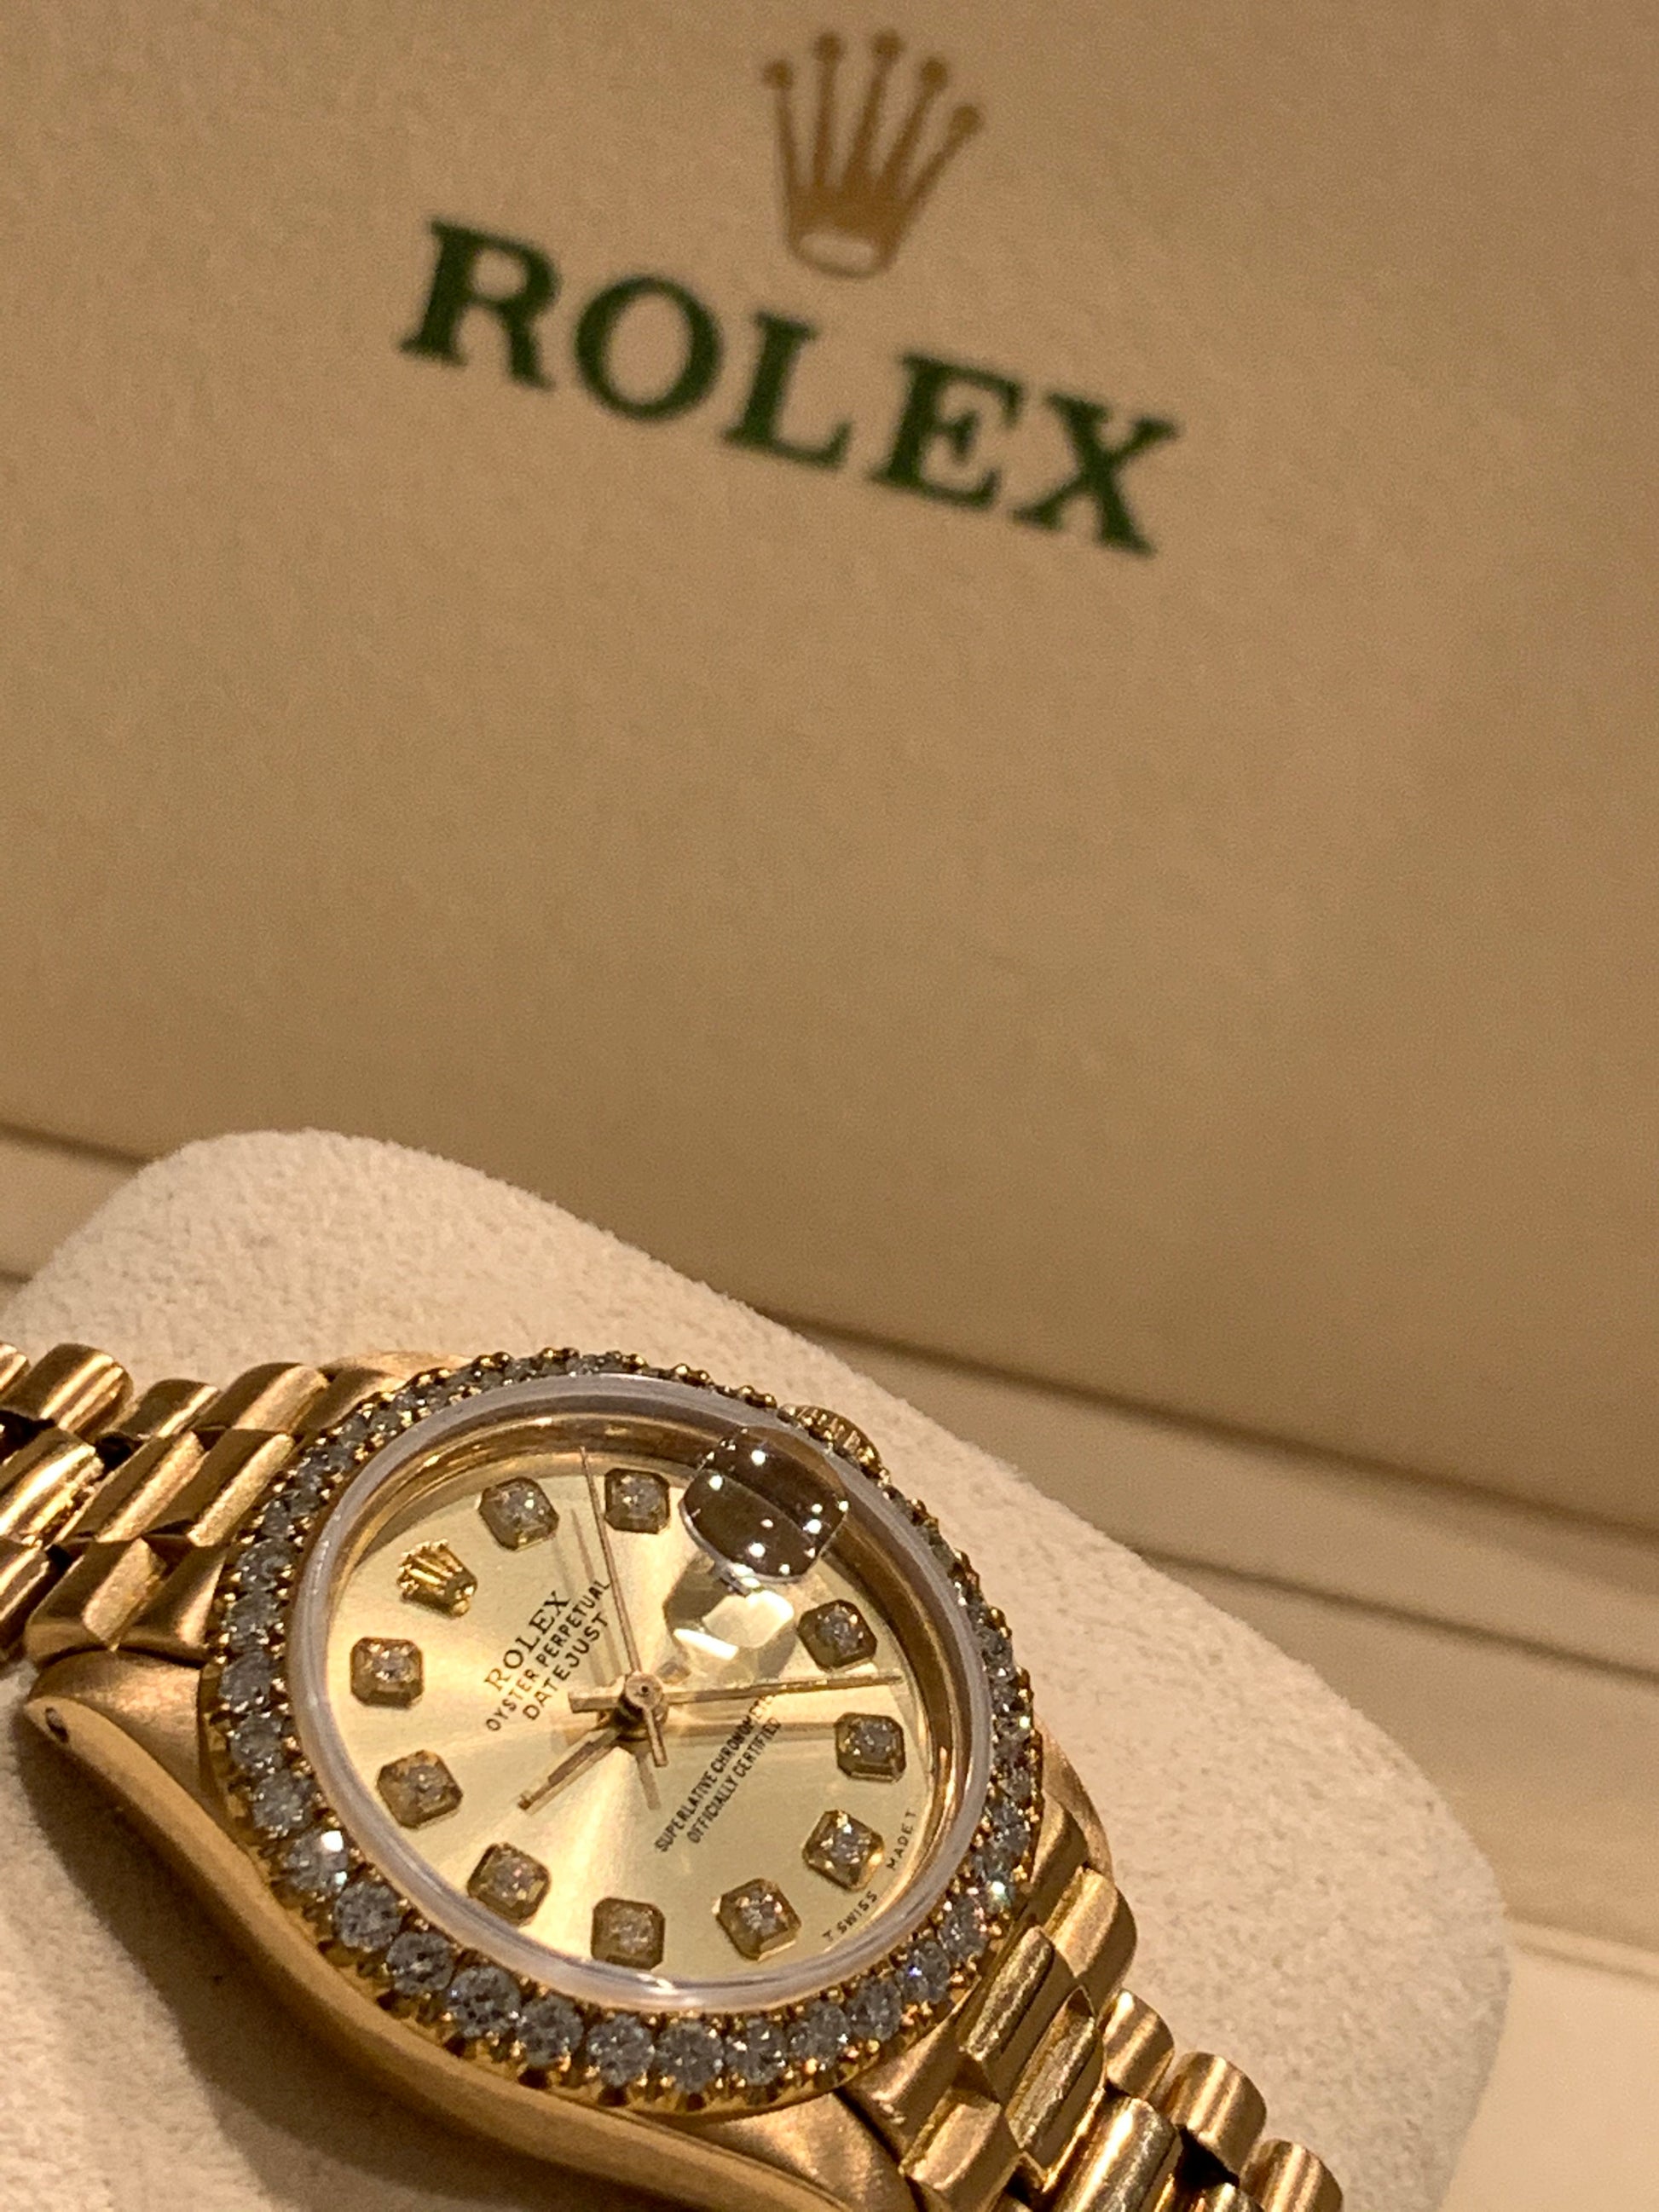 18K Gold Rolex Datejust Diamond Watch. 26mm. President Bracelet